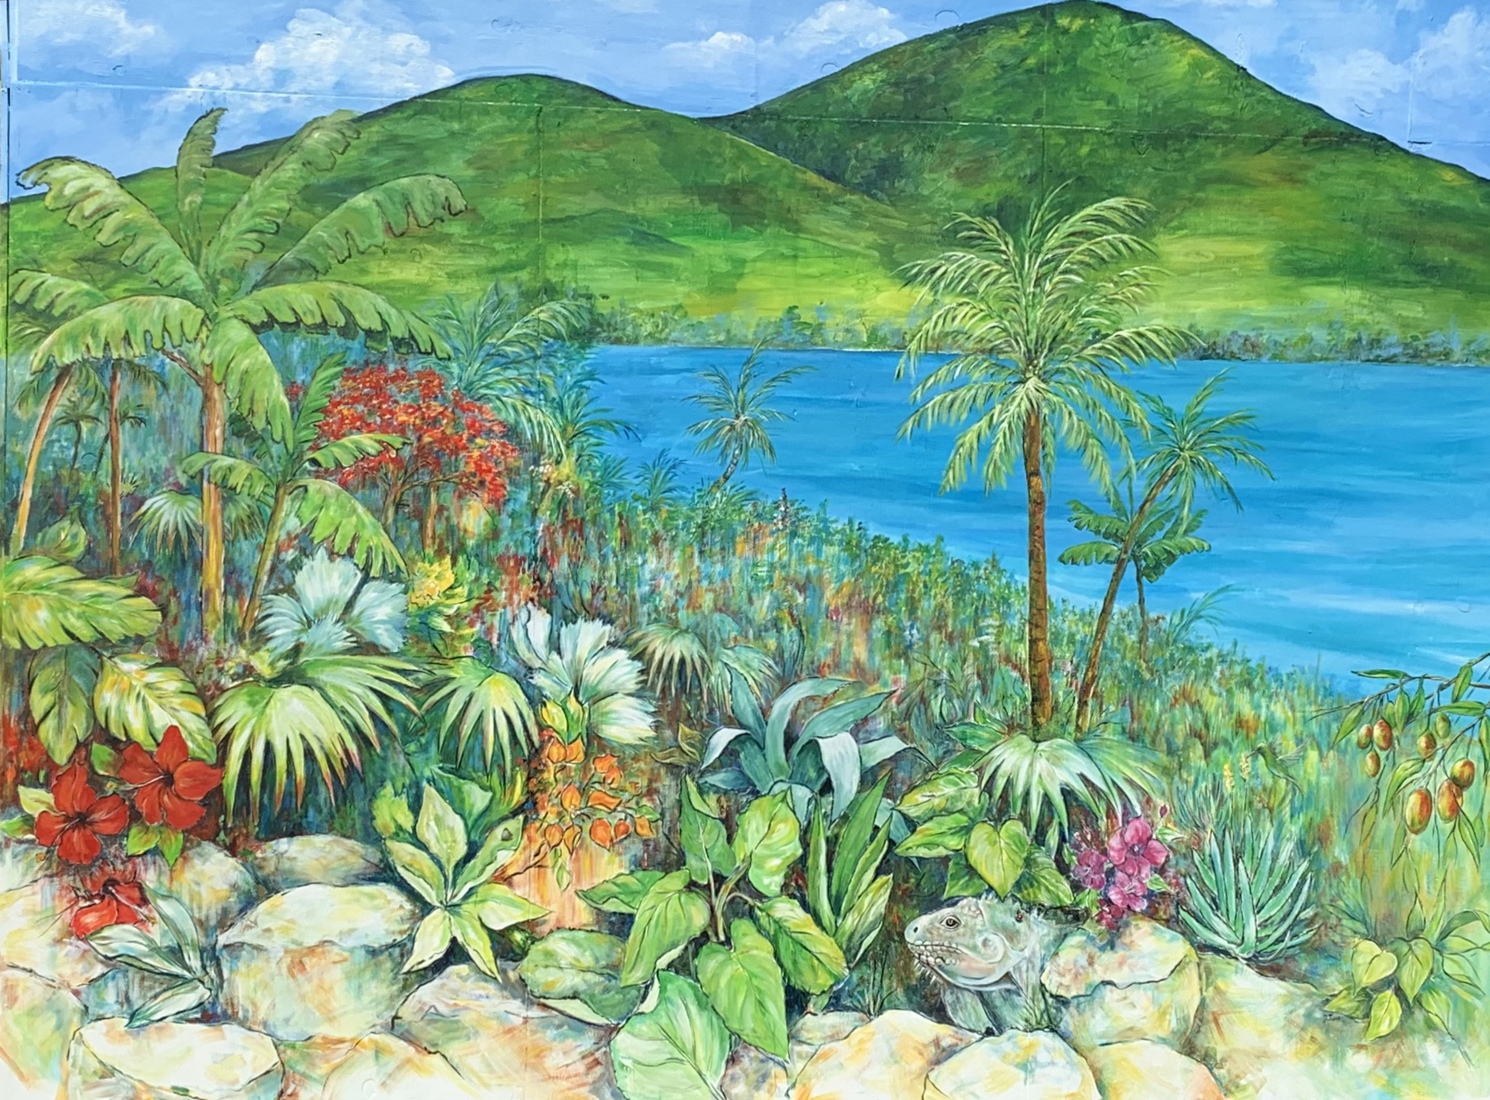 Landscape mural